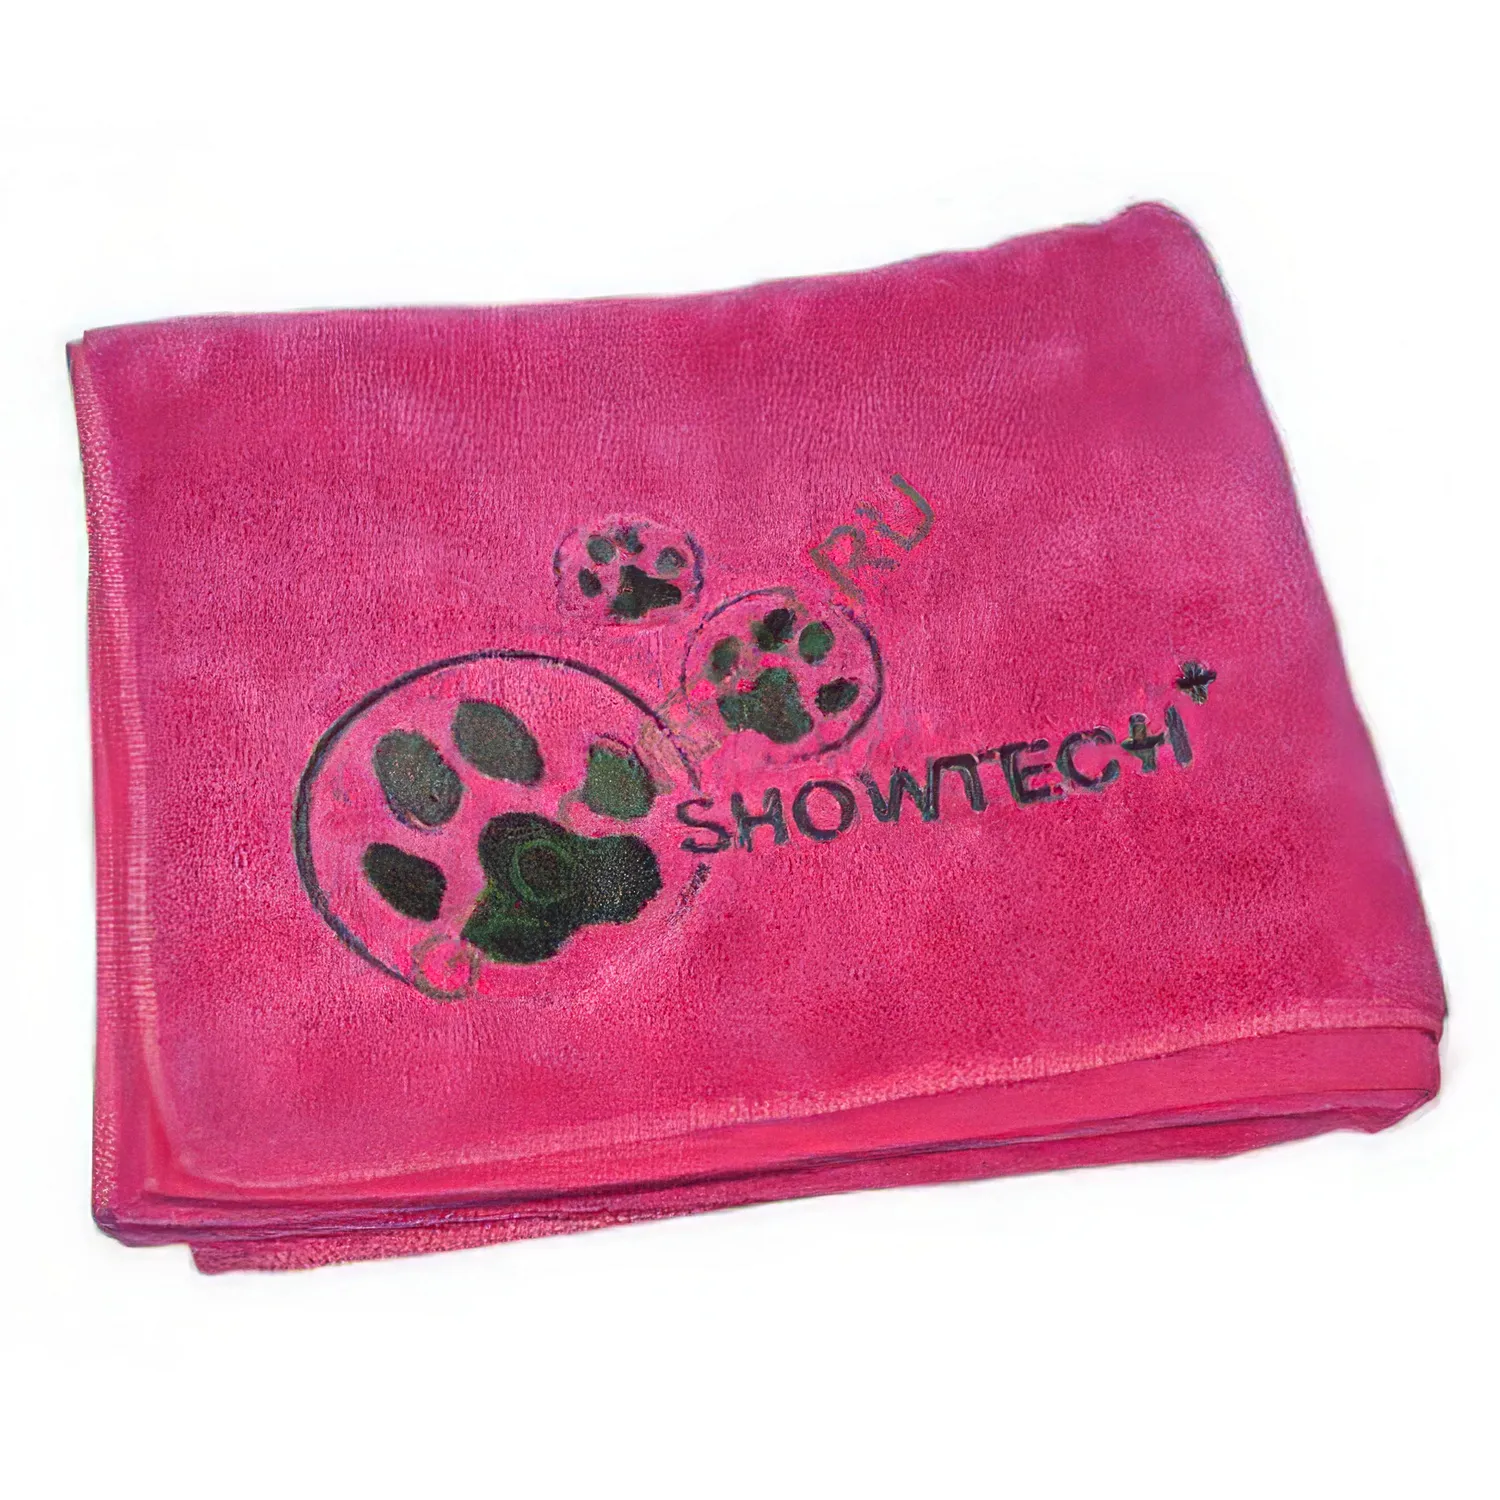 SHOW TECH Microtowel полотенце из микрофибры розовое 56x90 см